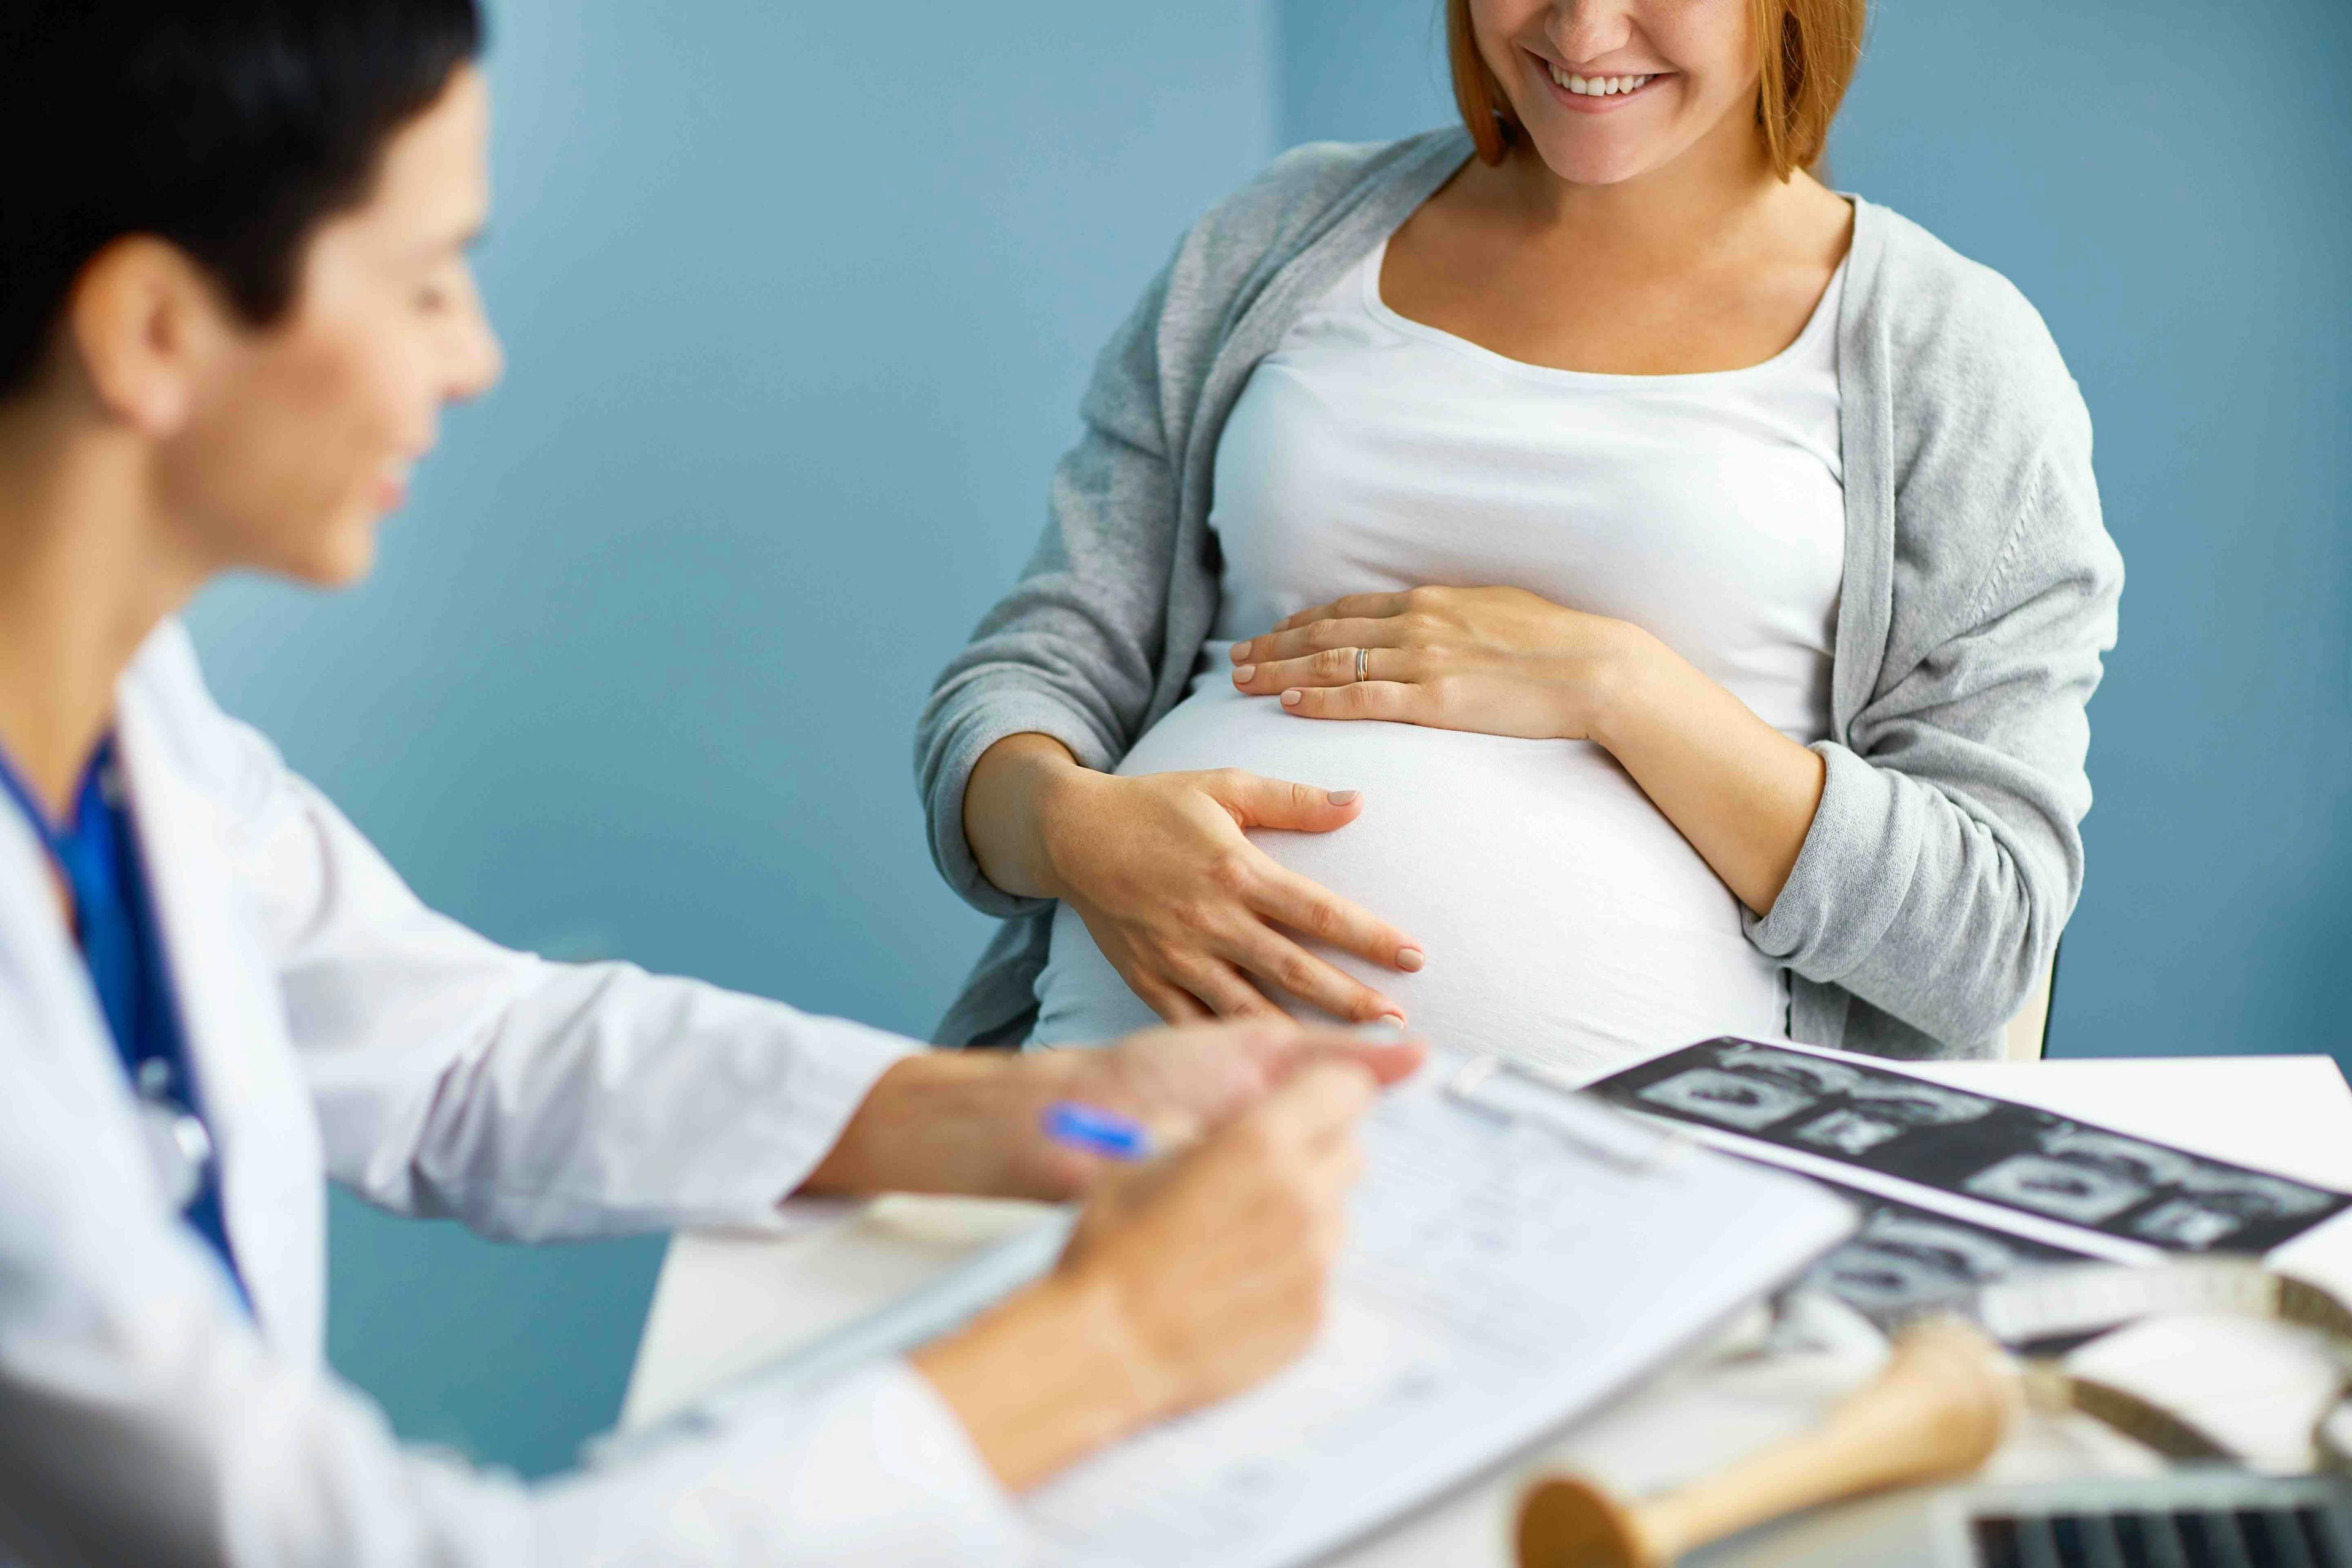 Doctor visit during pregnancy | Image credit: pressmaster - stock.adobe.com